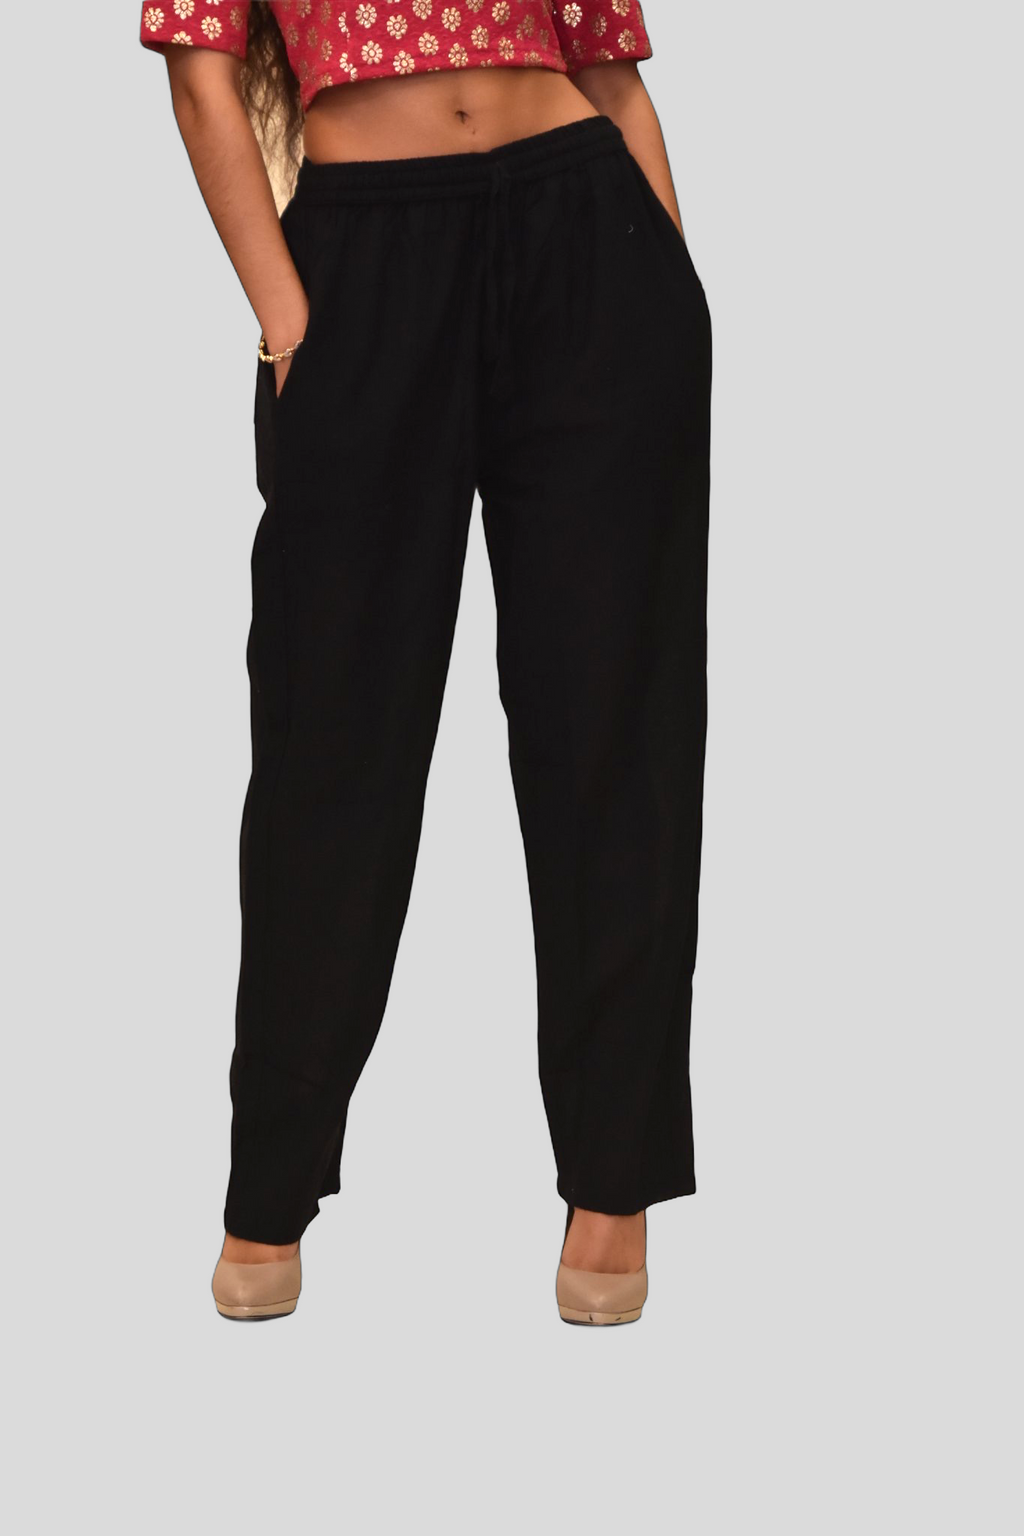 Unisex Cotton Jade  Black Straight  pants